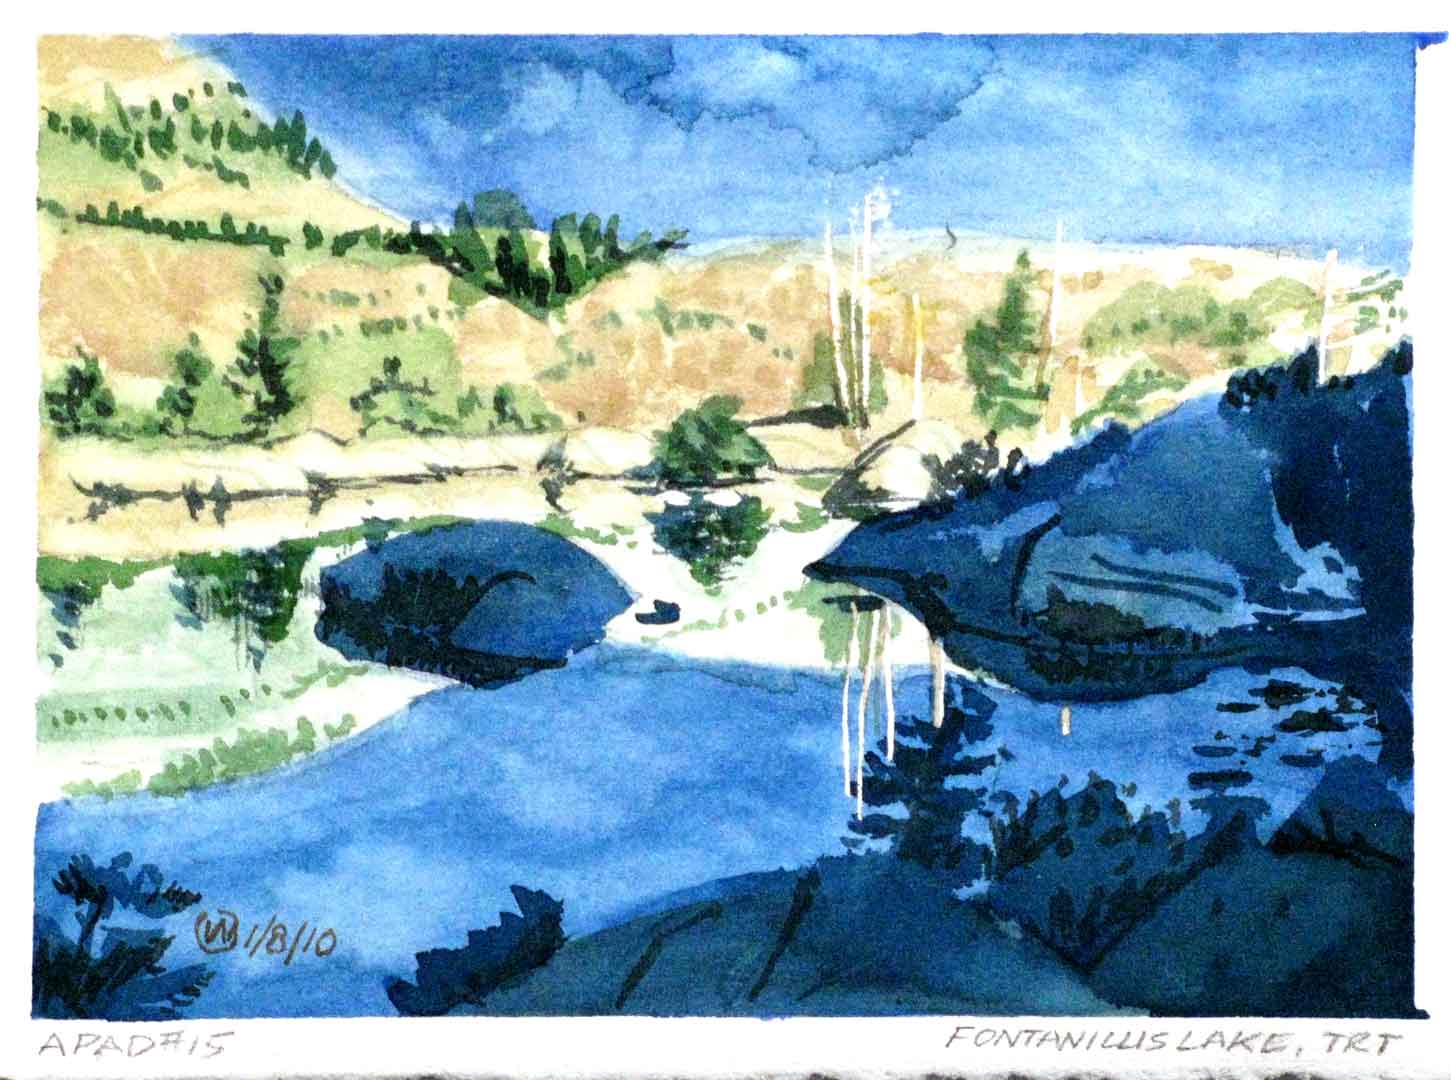 Fontanillis Lake - Tahoe Rim Trail, Watercolor on paper, 7 x 5